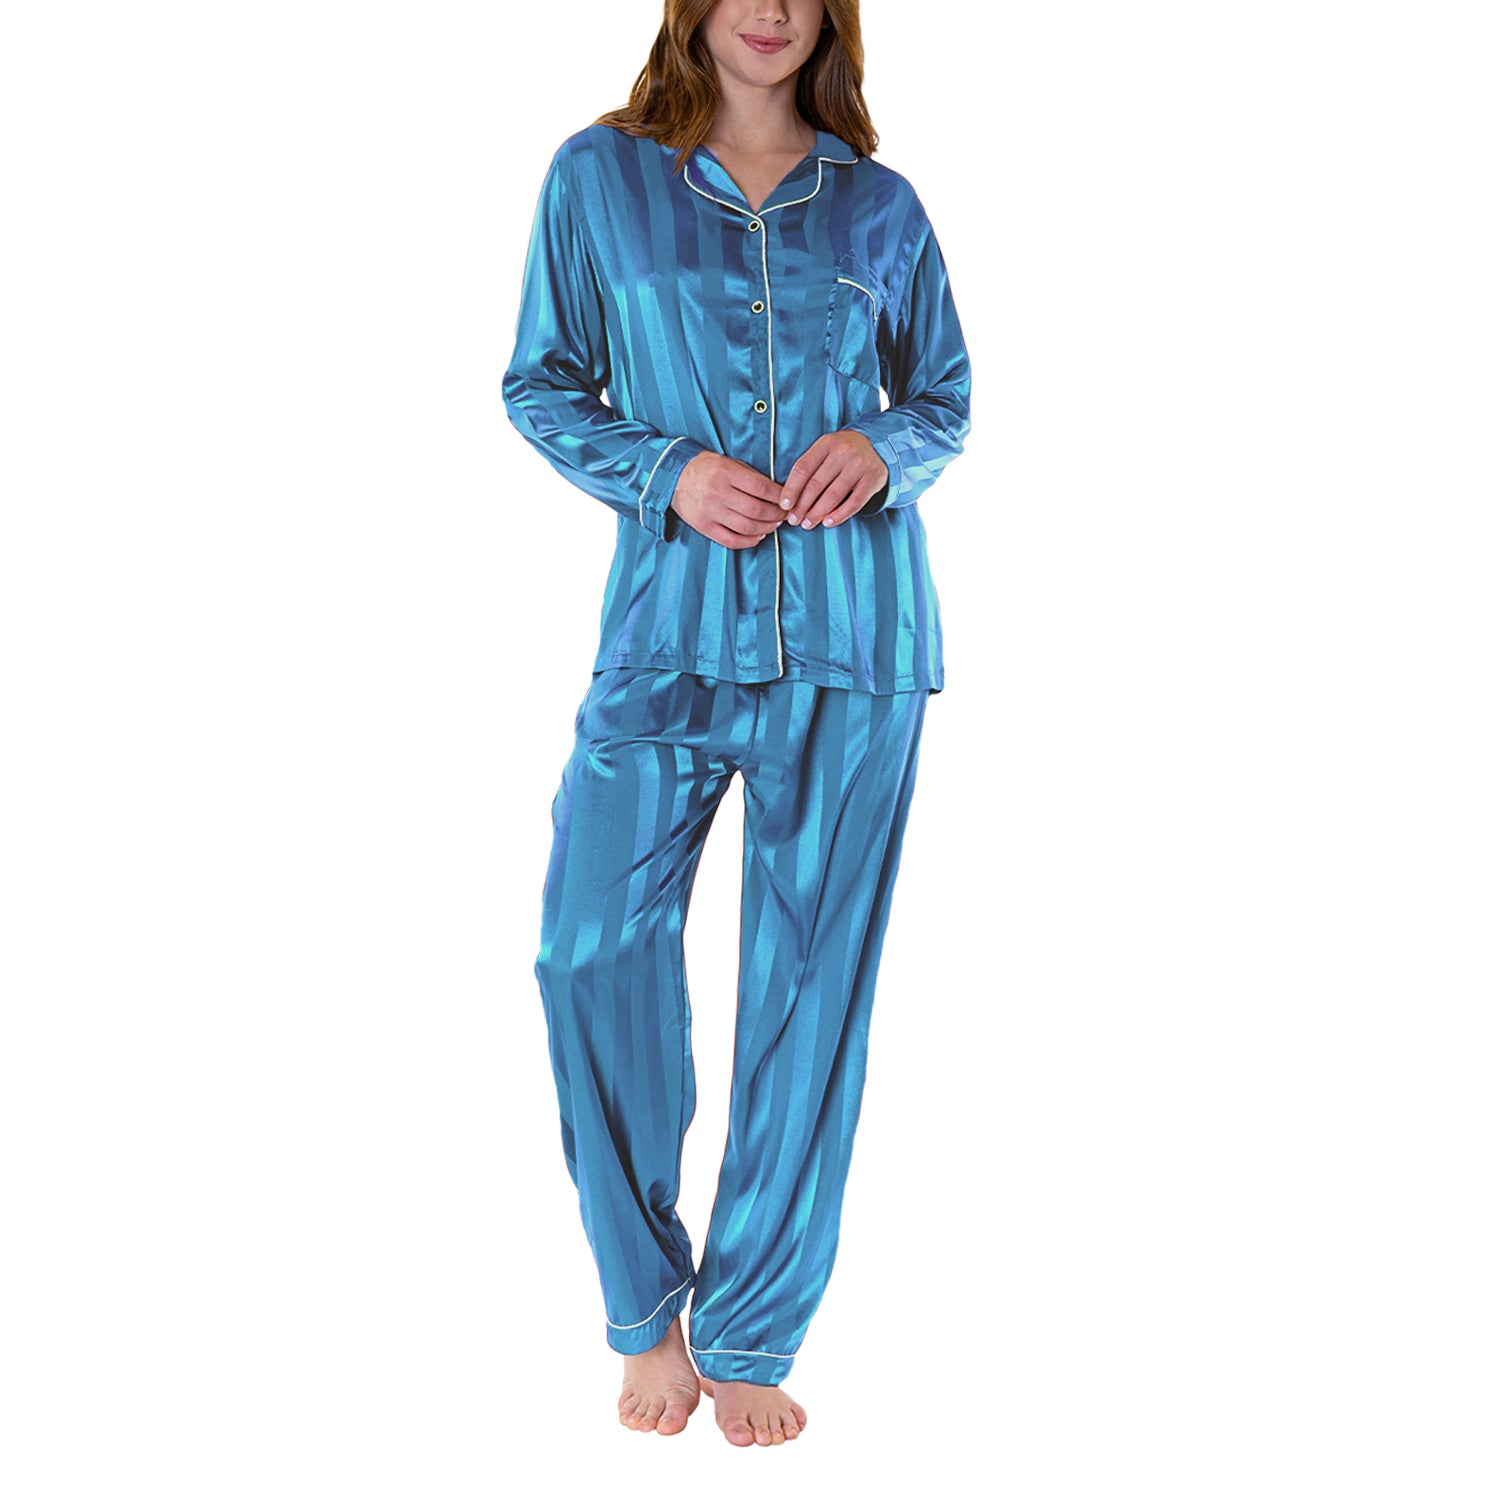 Pijama Satin Lunares Rosado Mujer Baziani 8563